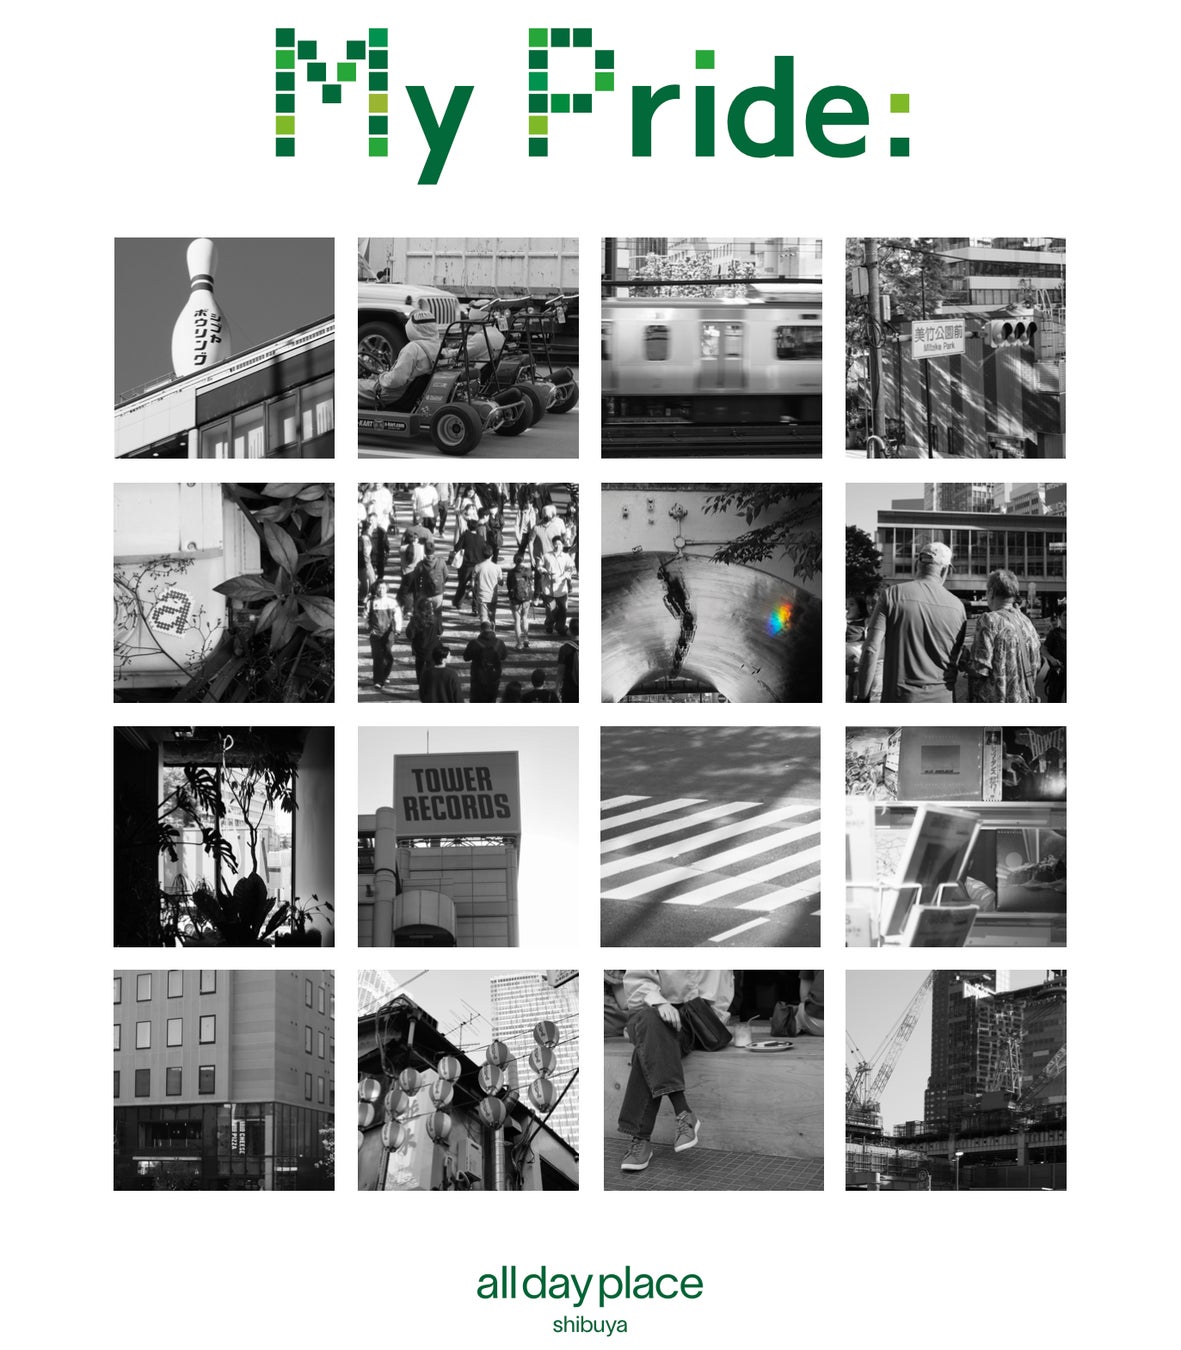 【all day place shibuya】Pride Month(プライド月間)の6月に、自分らしさを表現するイベント「My Pride：」...